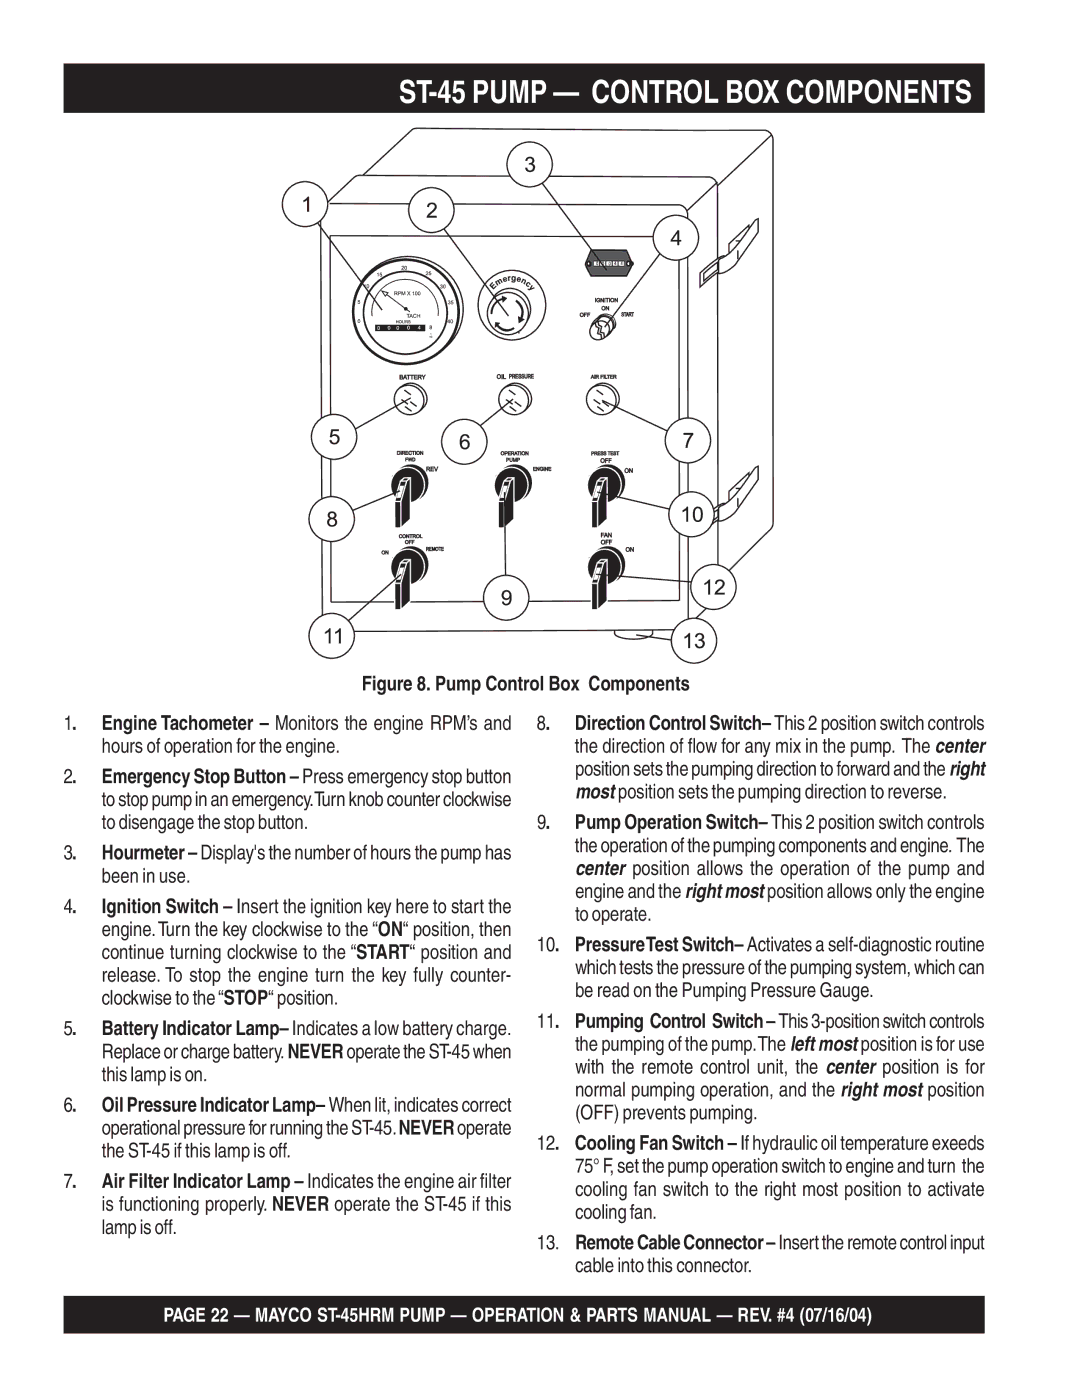 Multiquip ST-45HRM manual ST-45 Pump Control BOX Components 